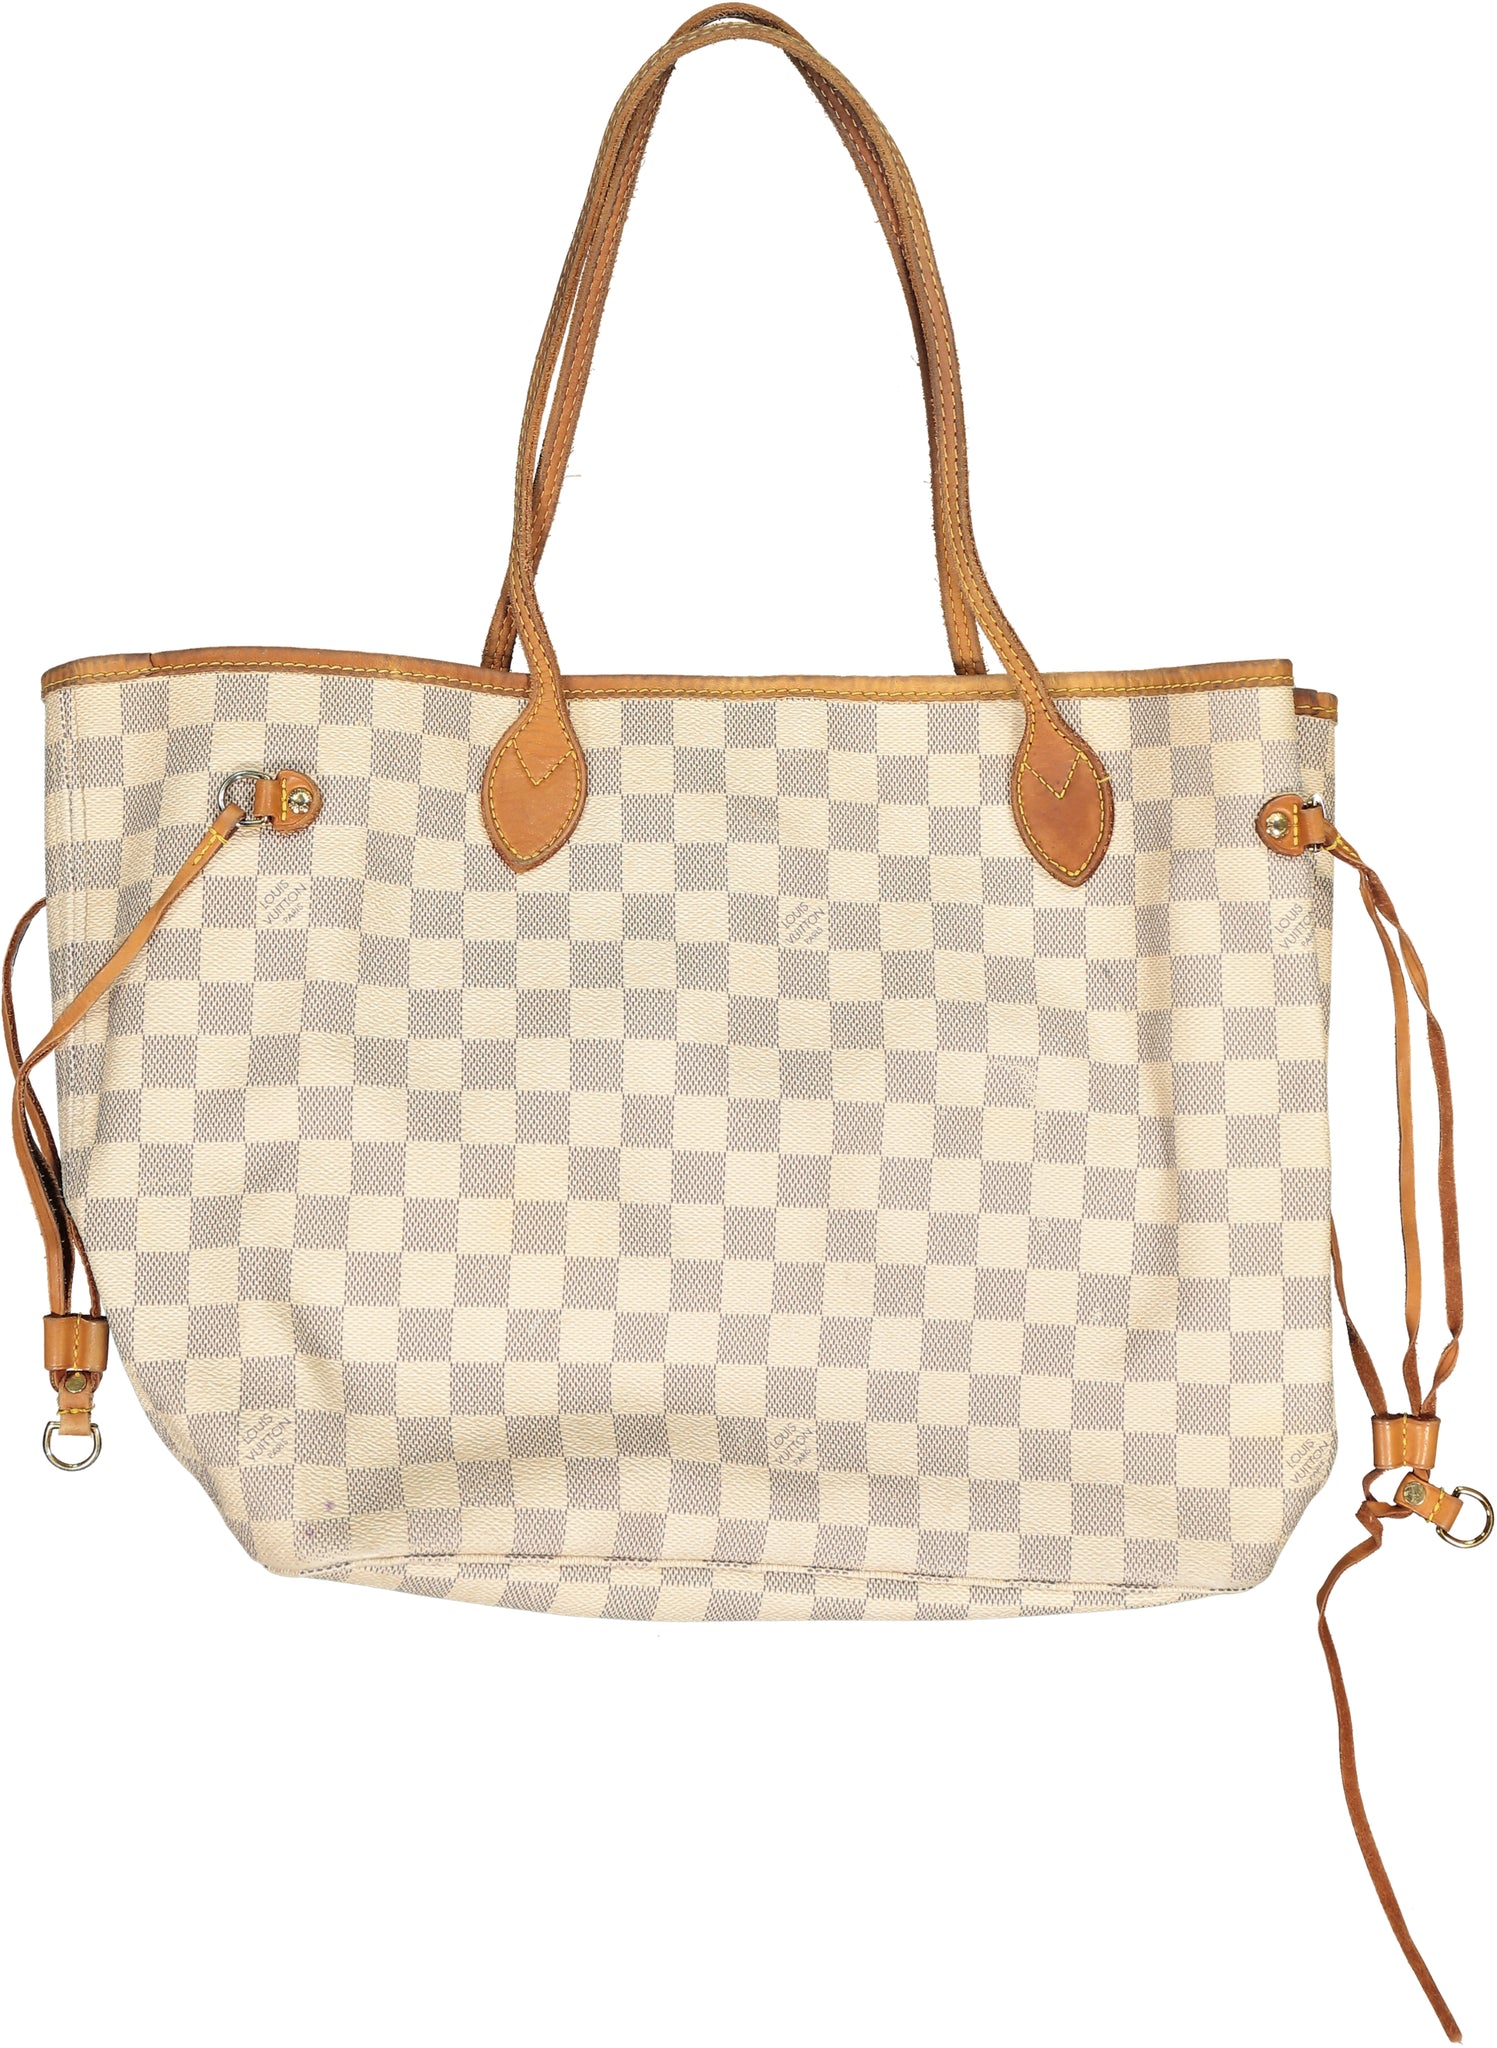 Handbag Designer By Louis Vuitton Size: Medium